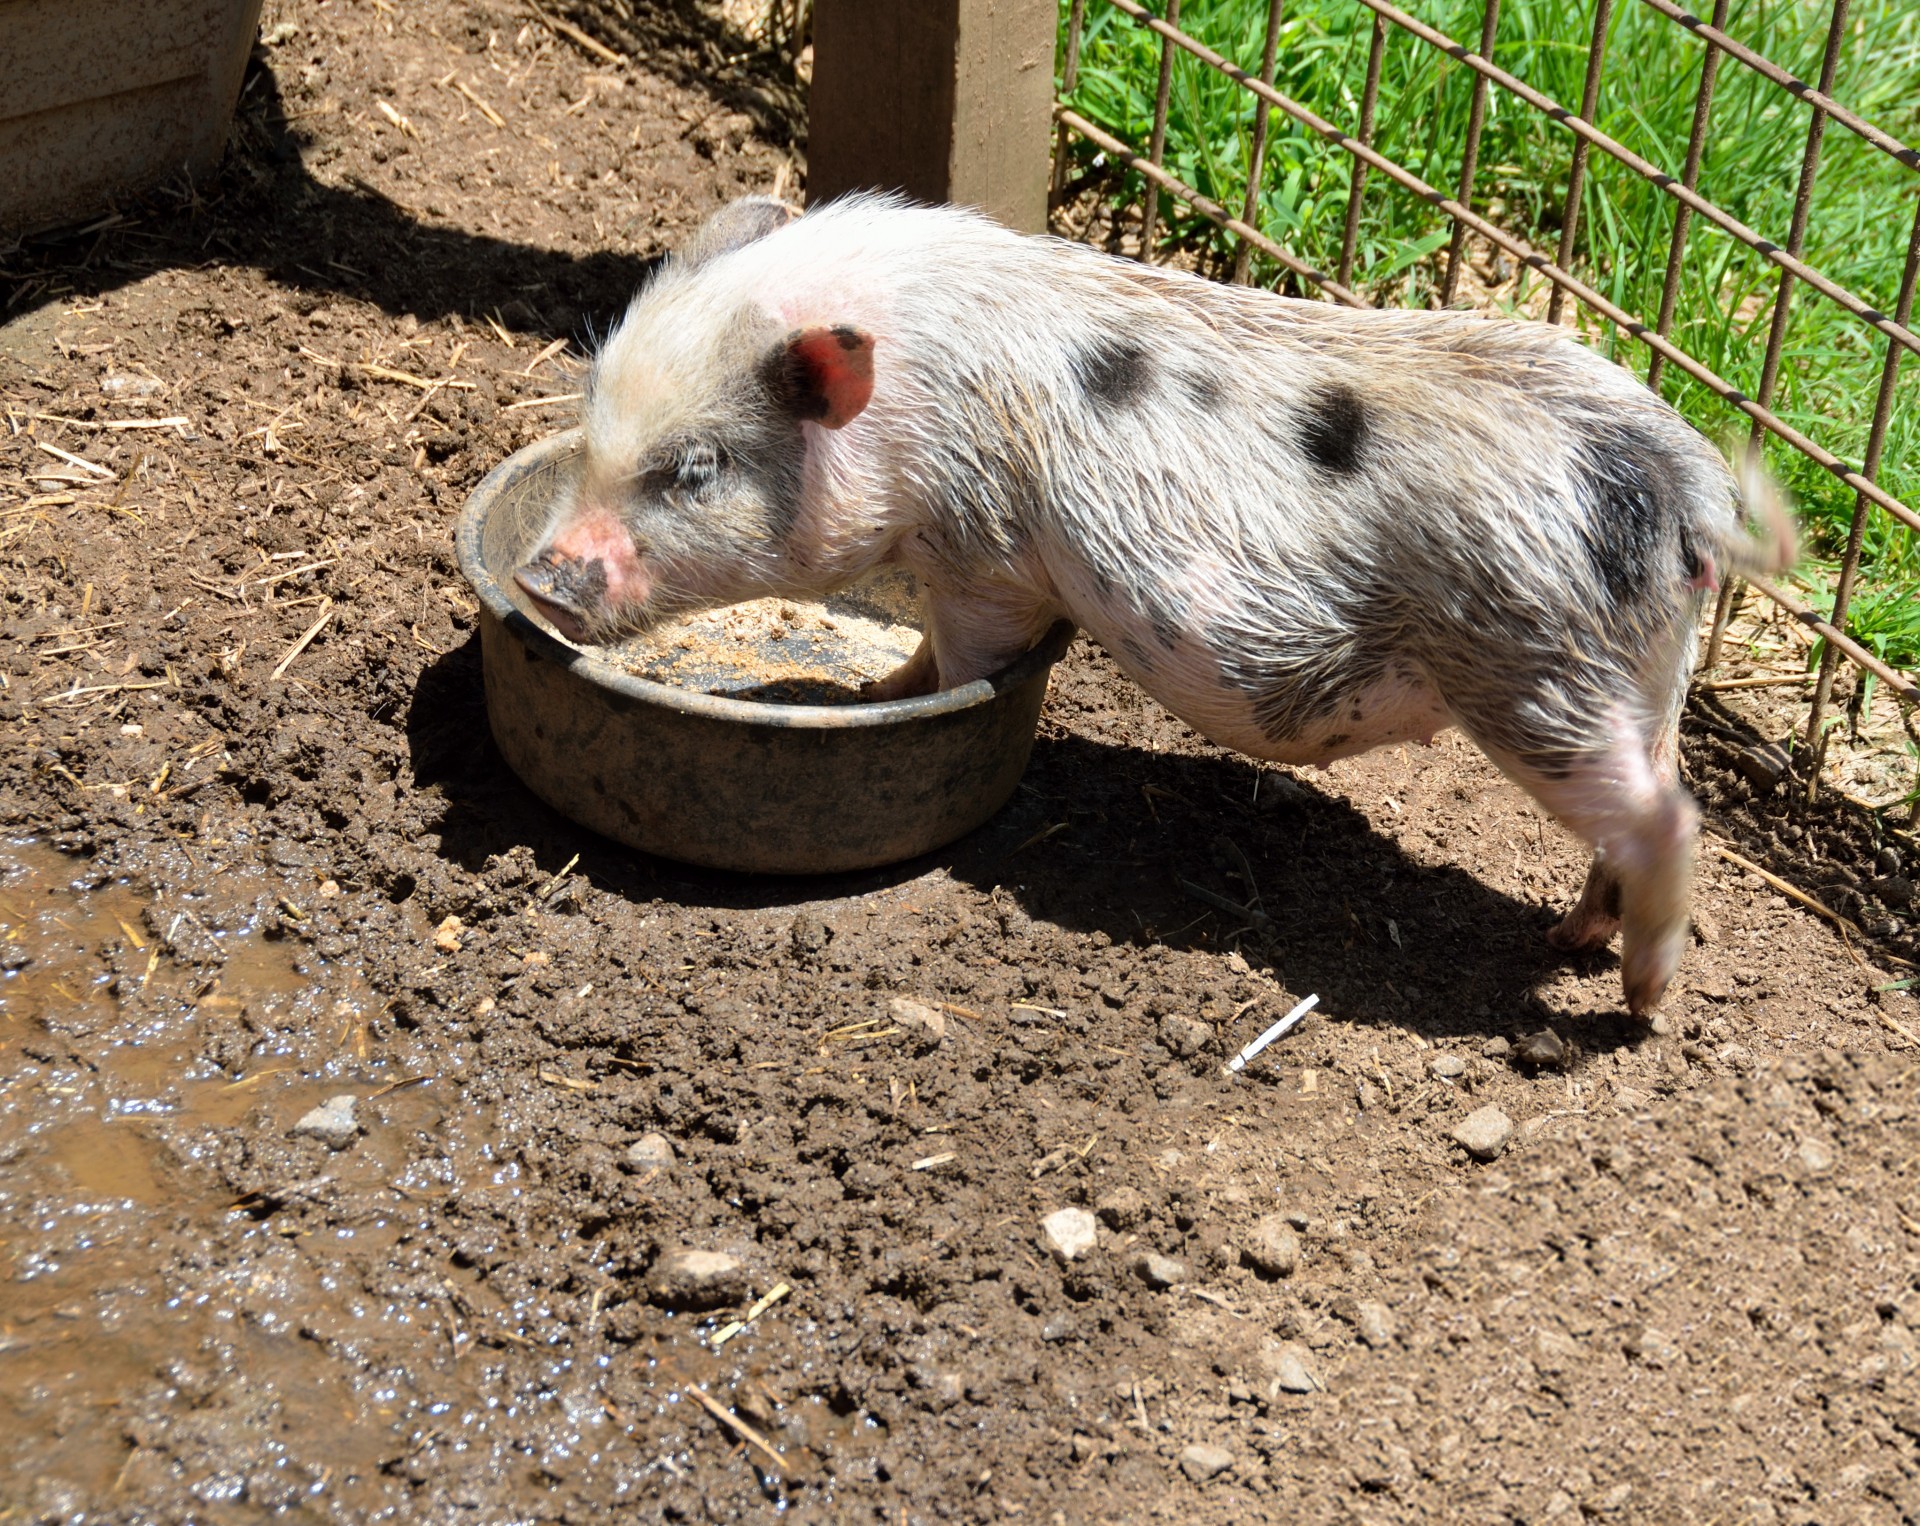 Pig Feeding At Farm